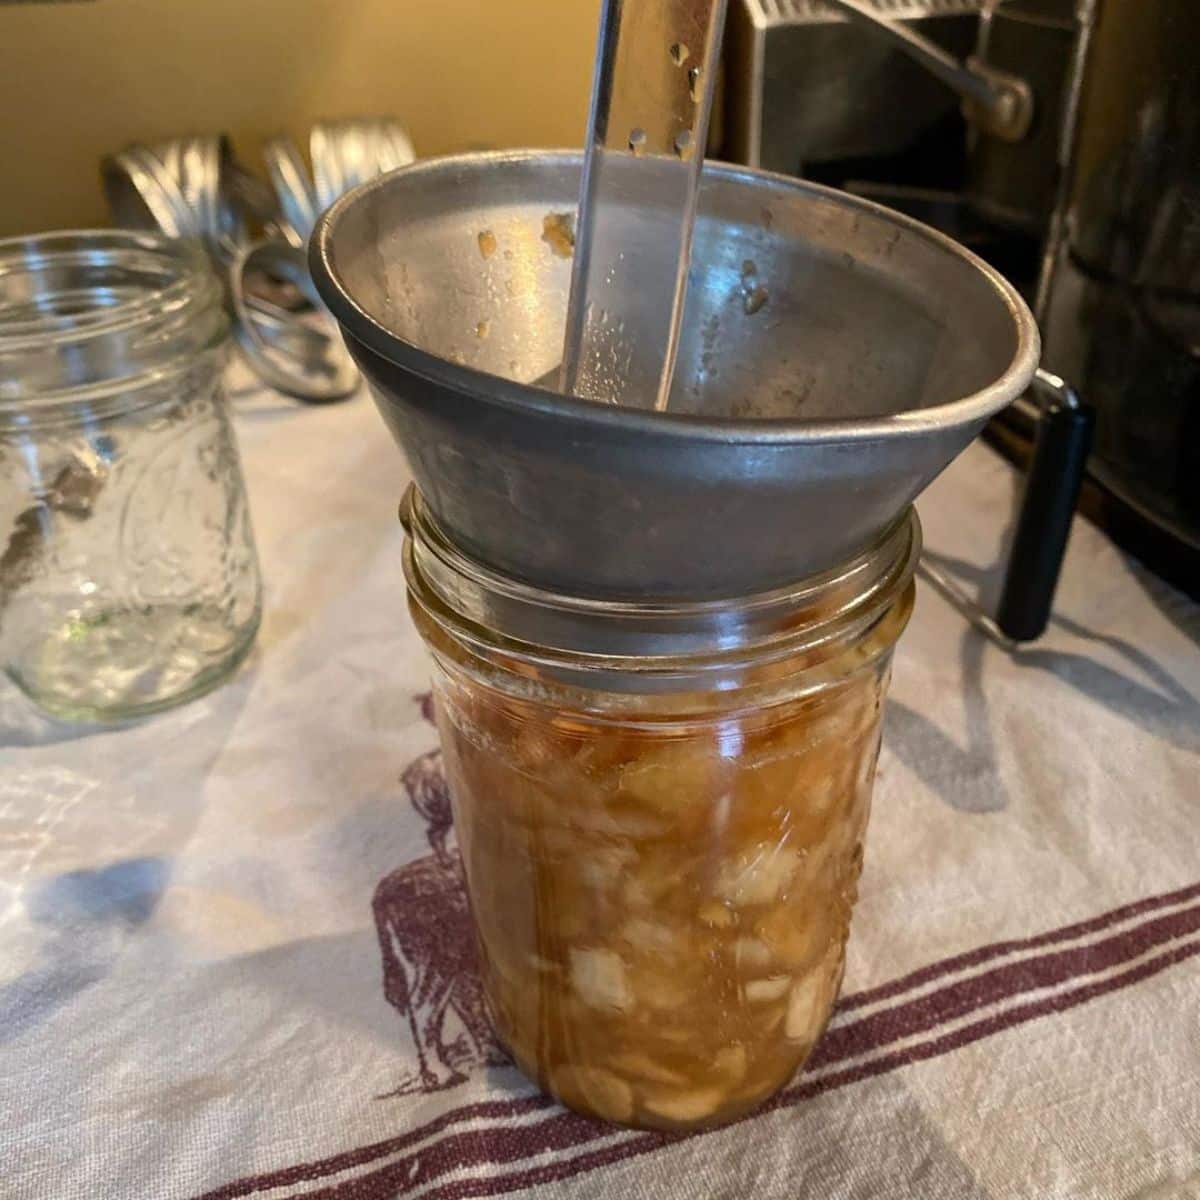 Homemade applesauce poured into a glass jar.